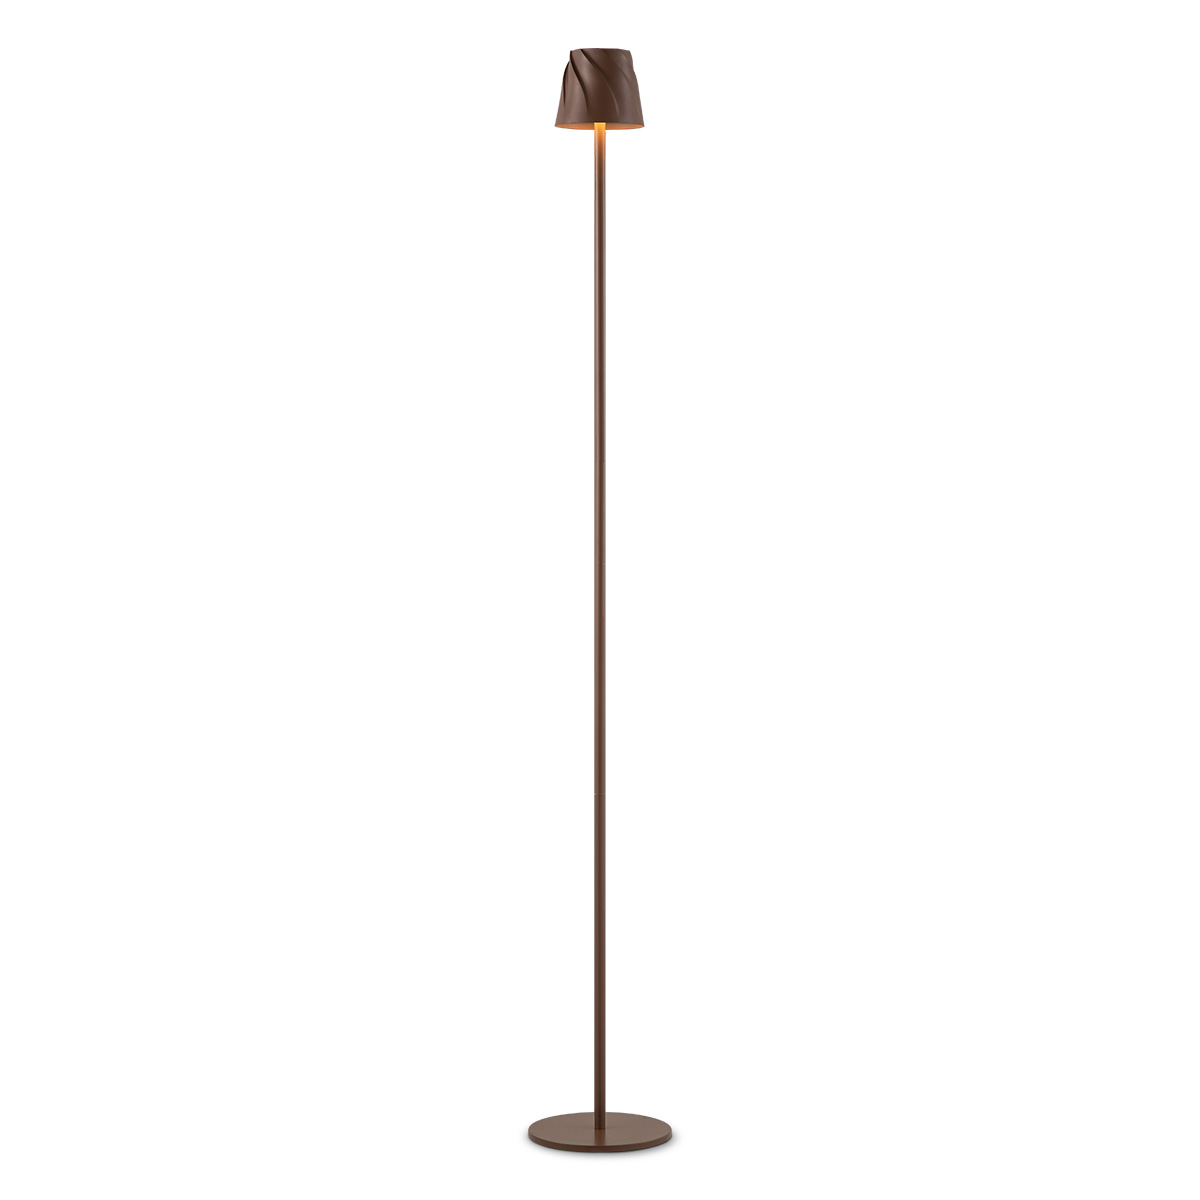 Tangla lighting - TLF7634-01BN - LED floor lamp - rechargeable plastic - brown - whirl